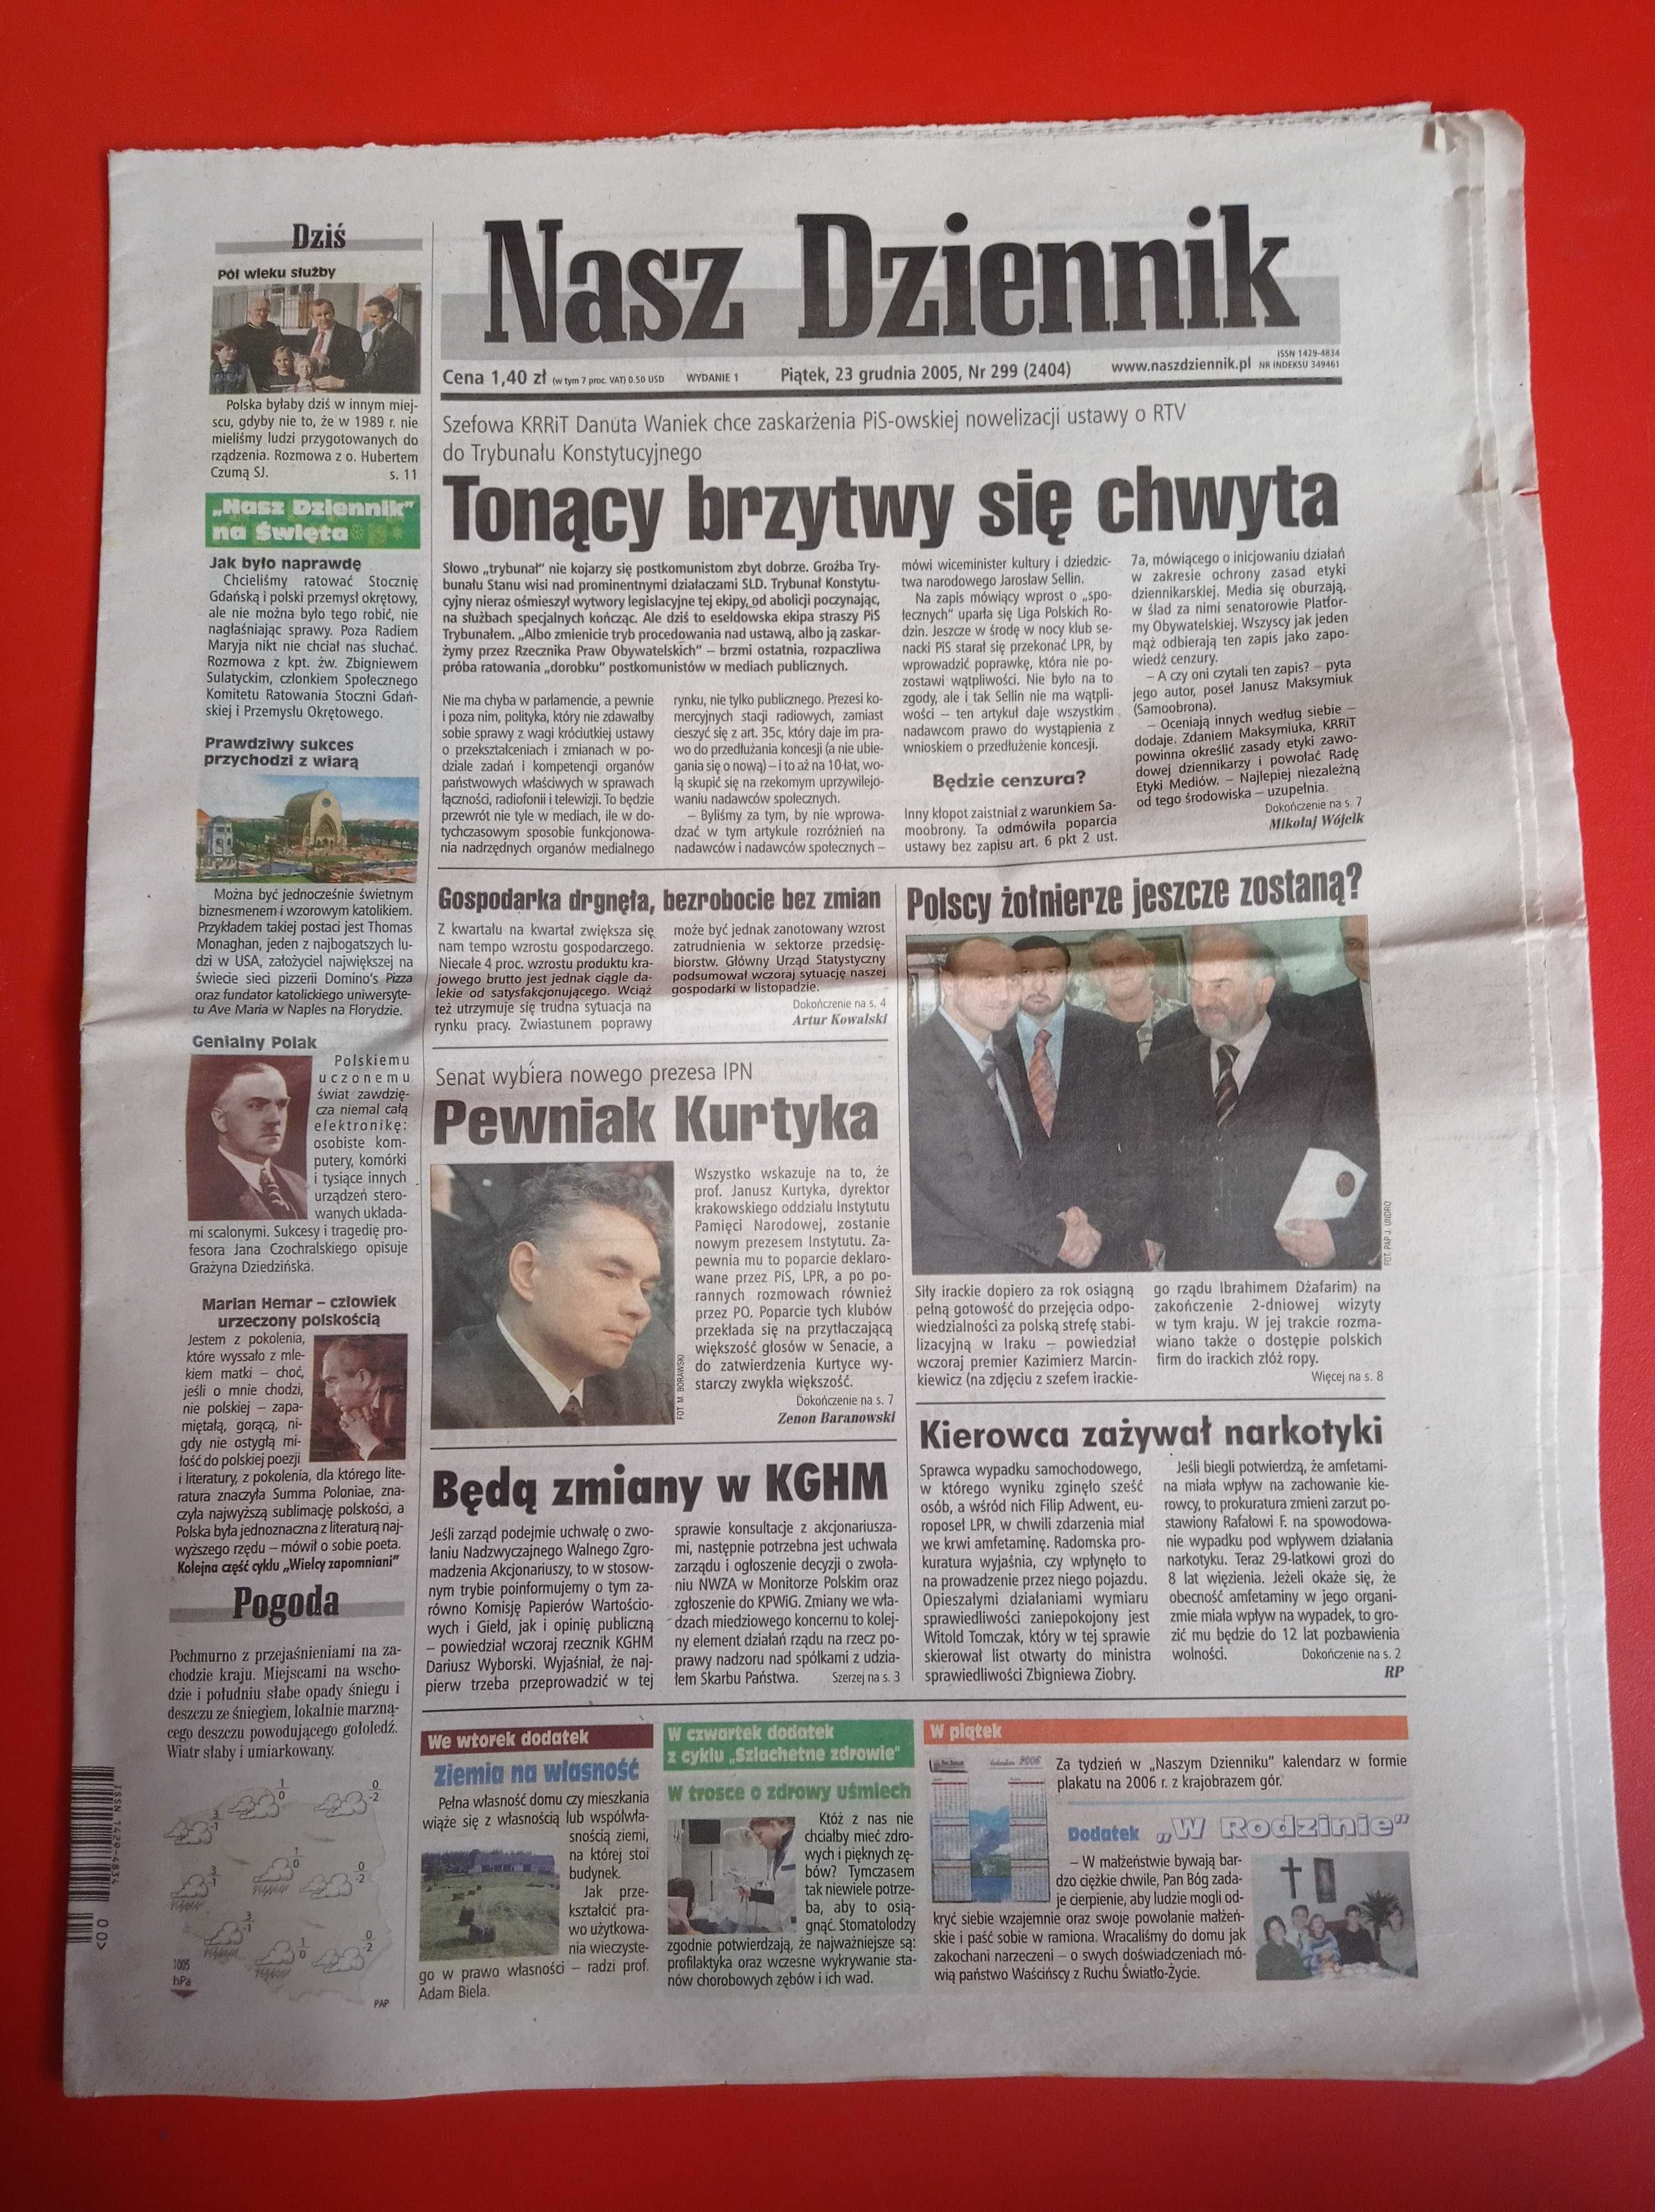 Nasz Dziennik, nr 299/2005, 23 grudnia 2005